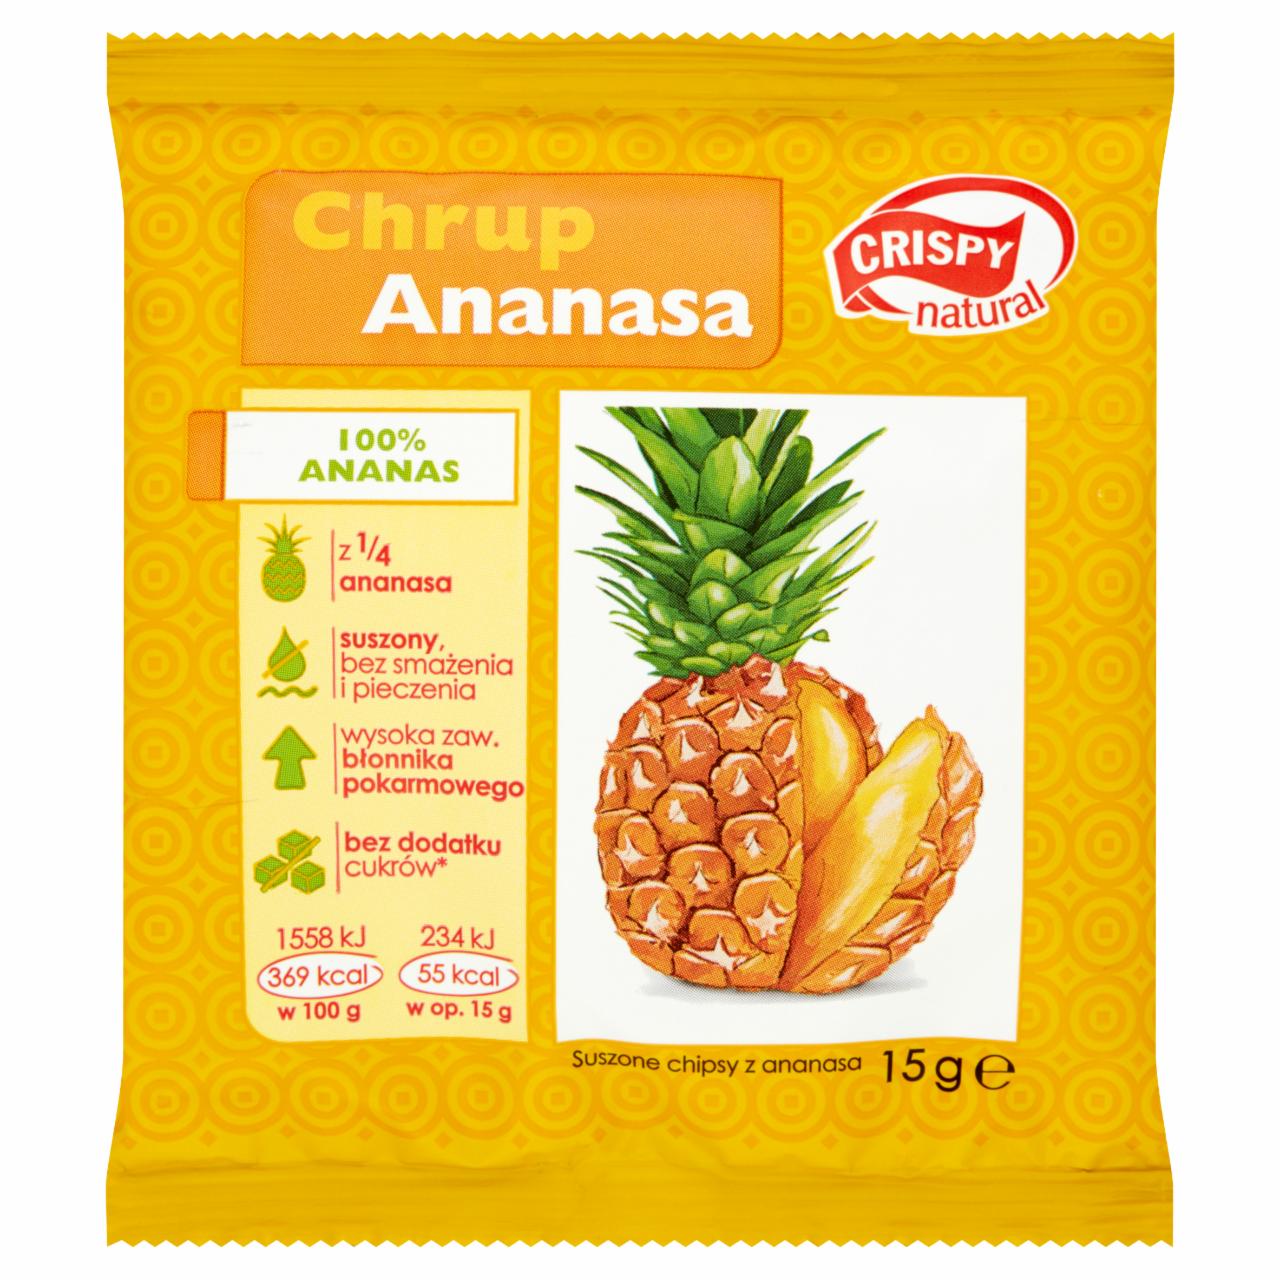 Zdjęcia - Suszone chipsy z ananasa Crispy Natural